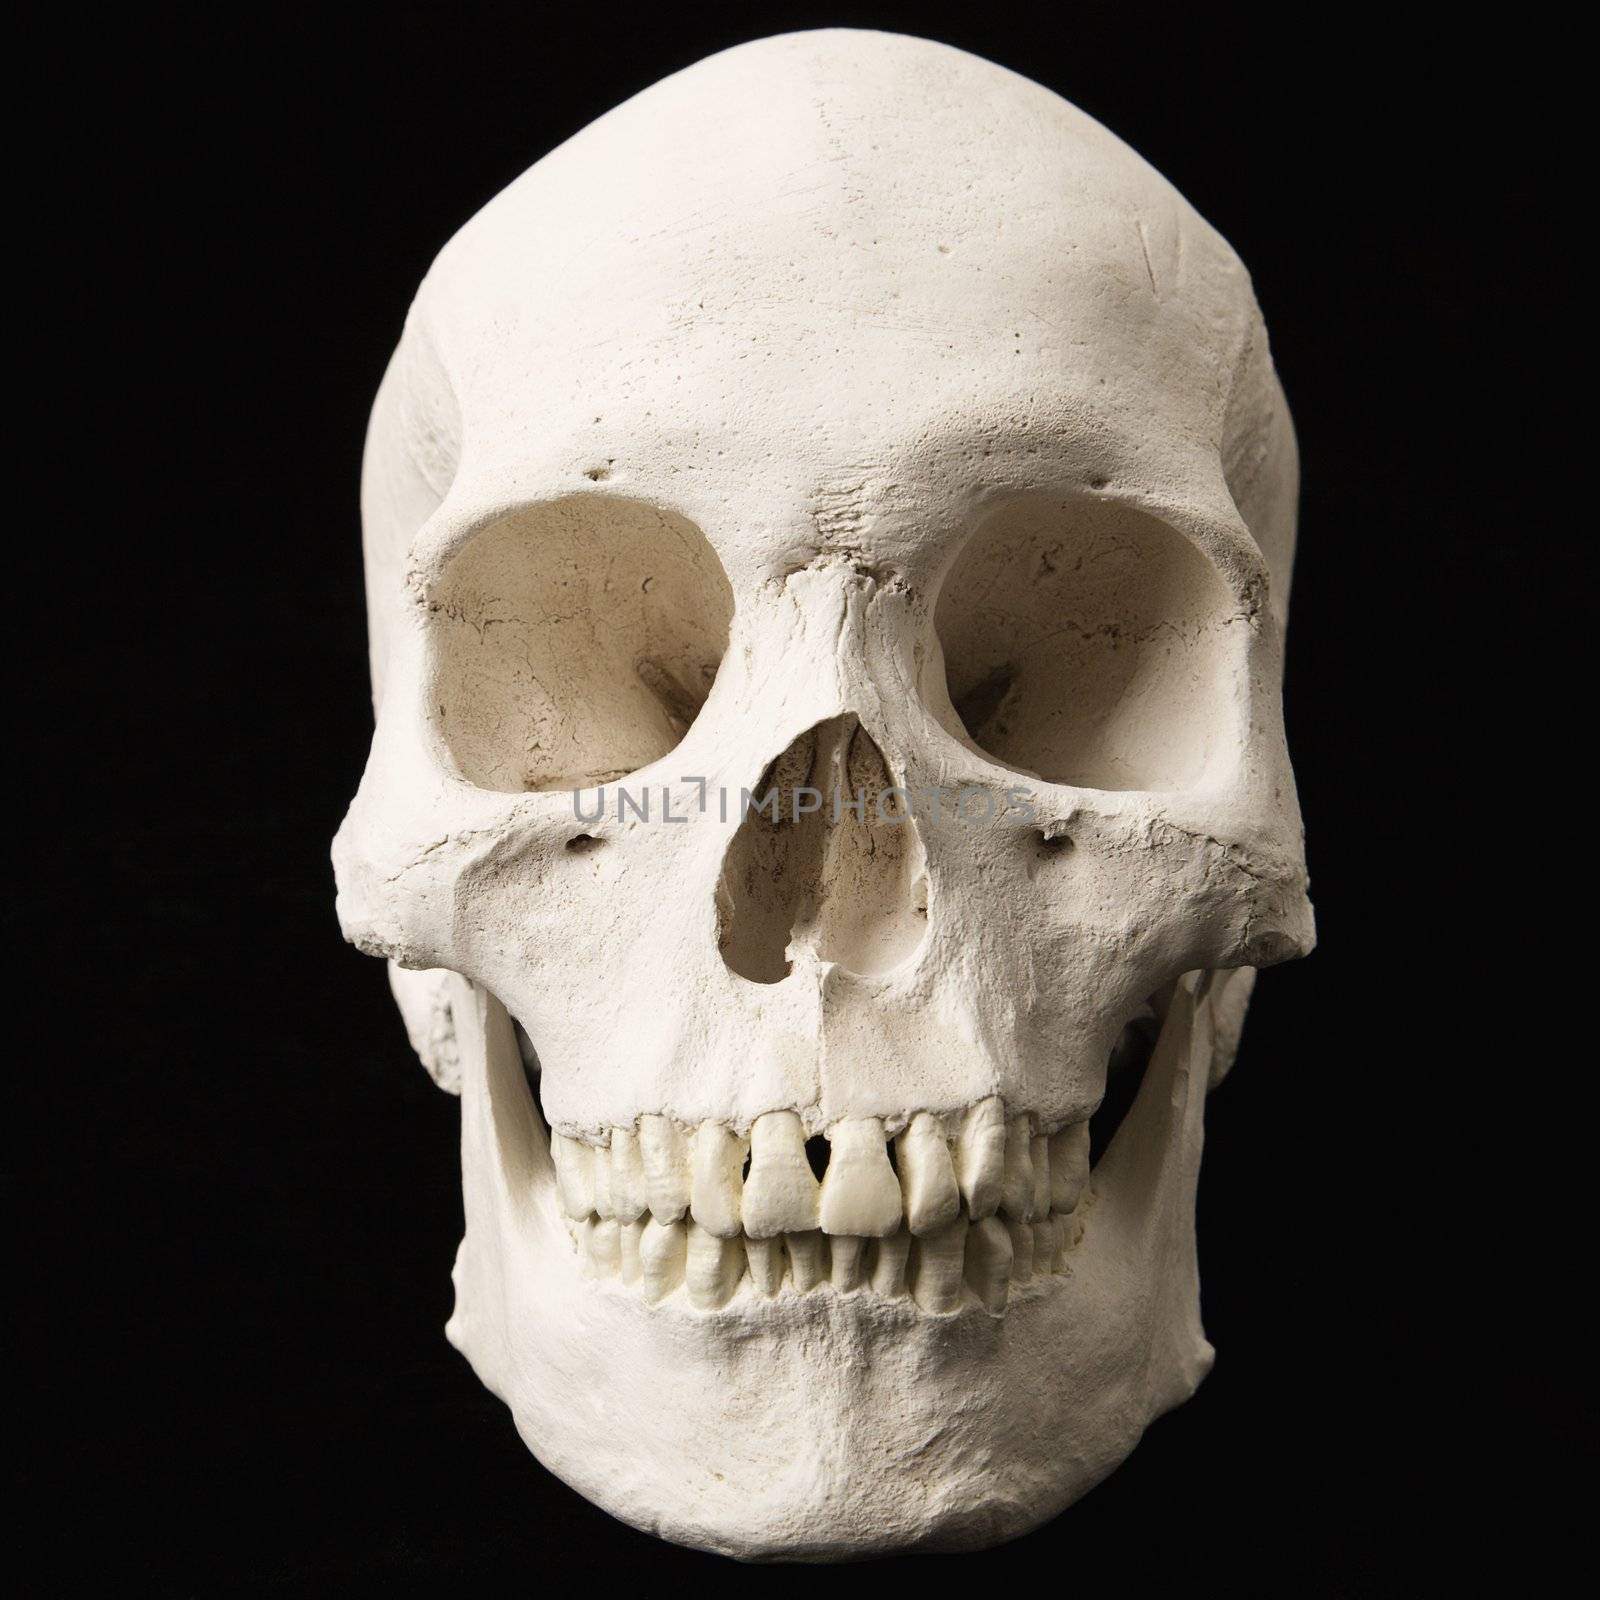 Human skull with teeth on black.